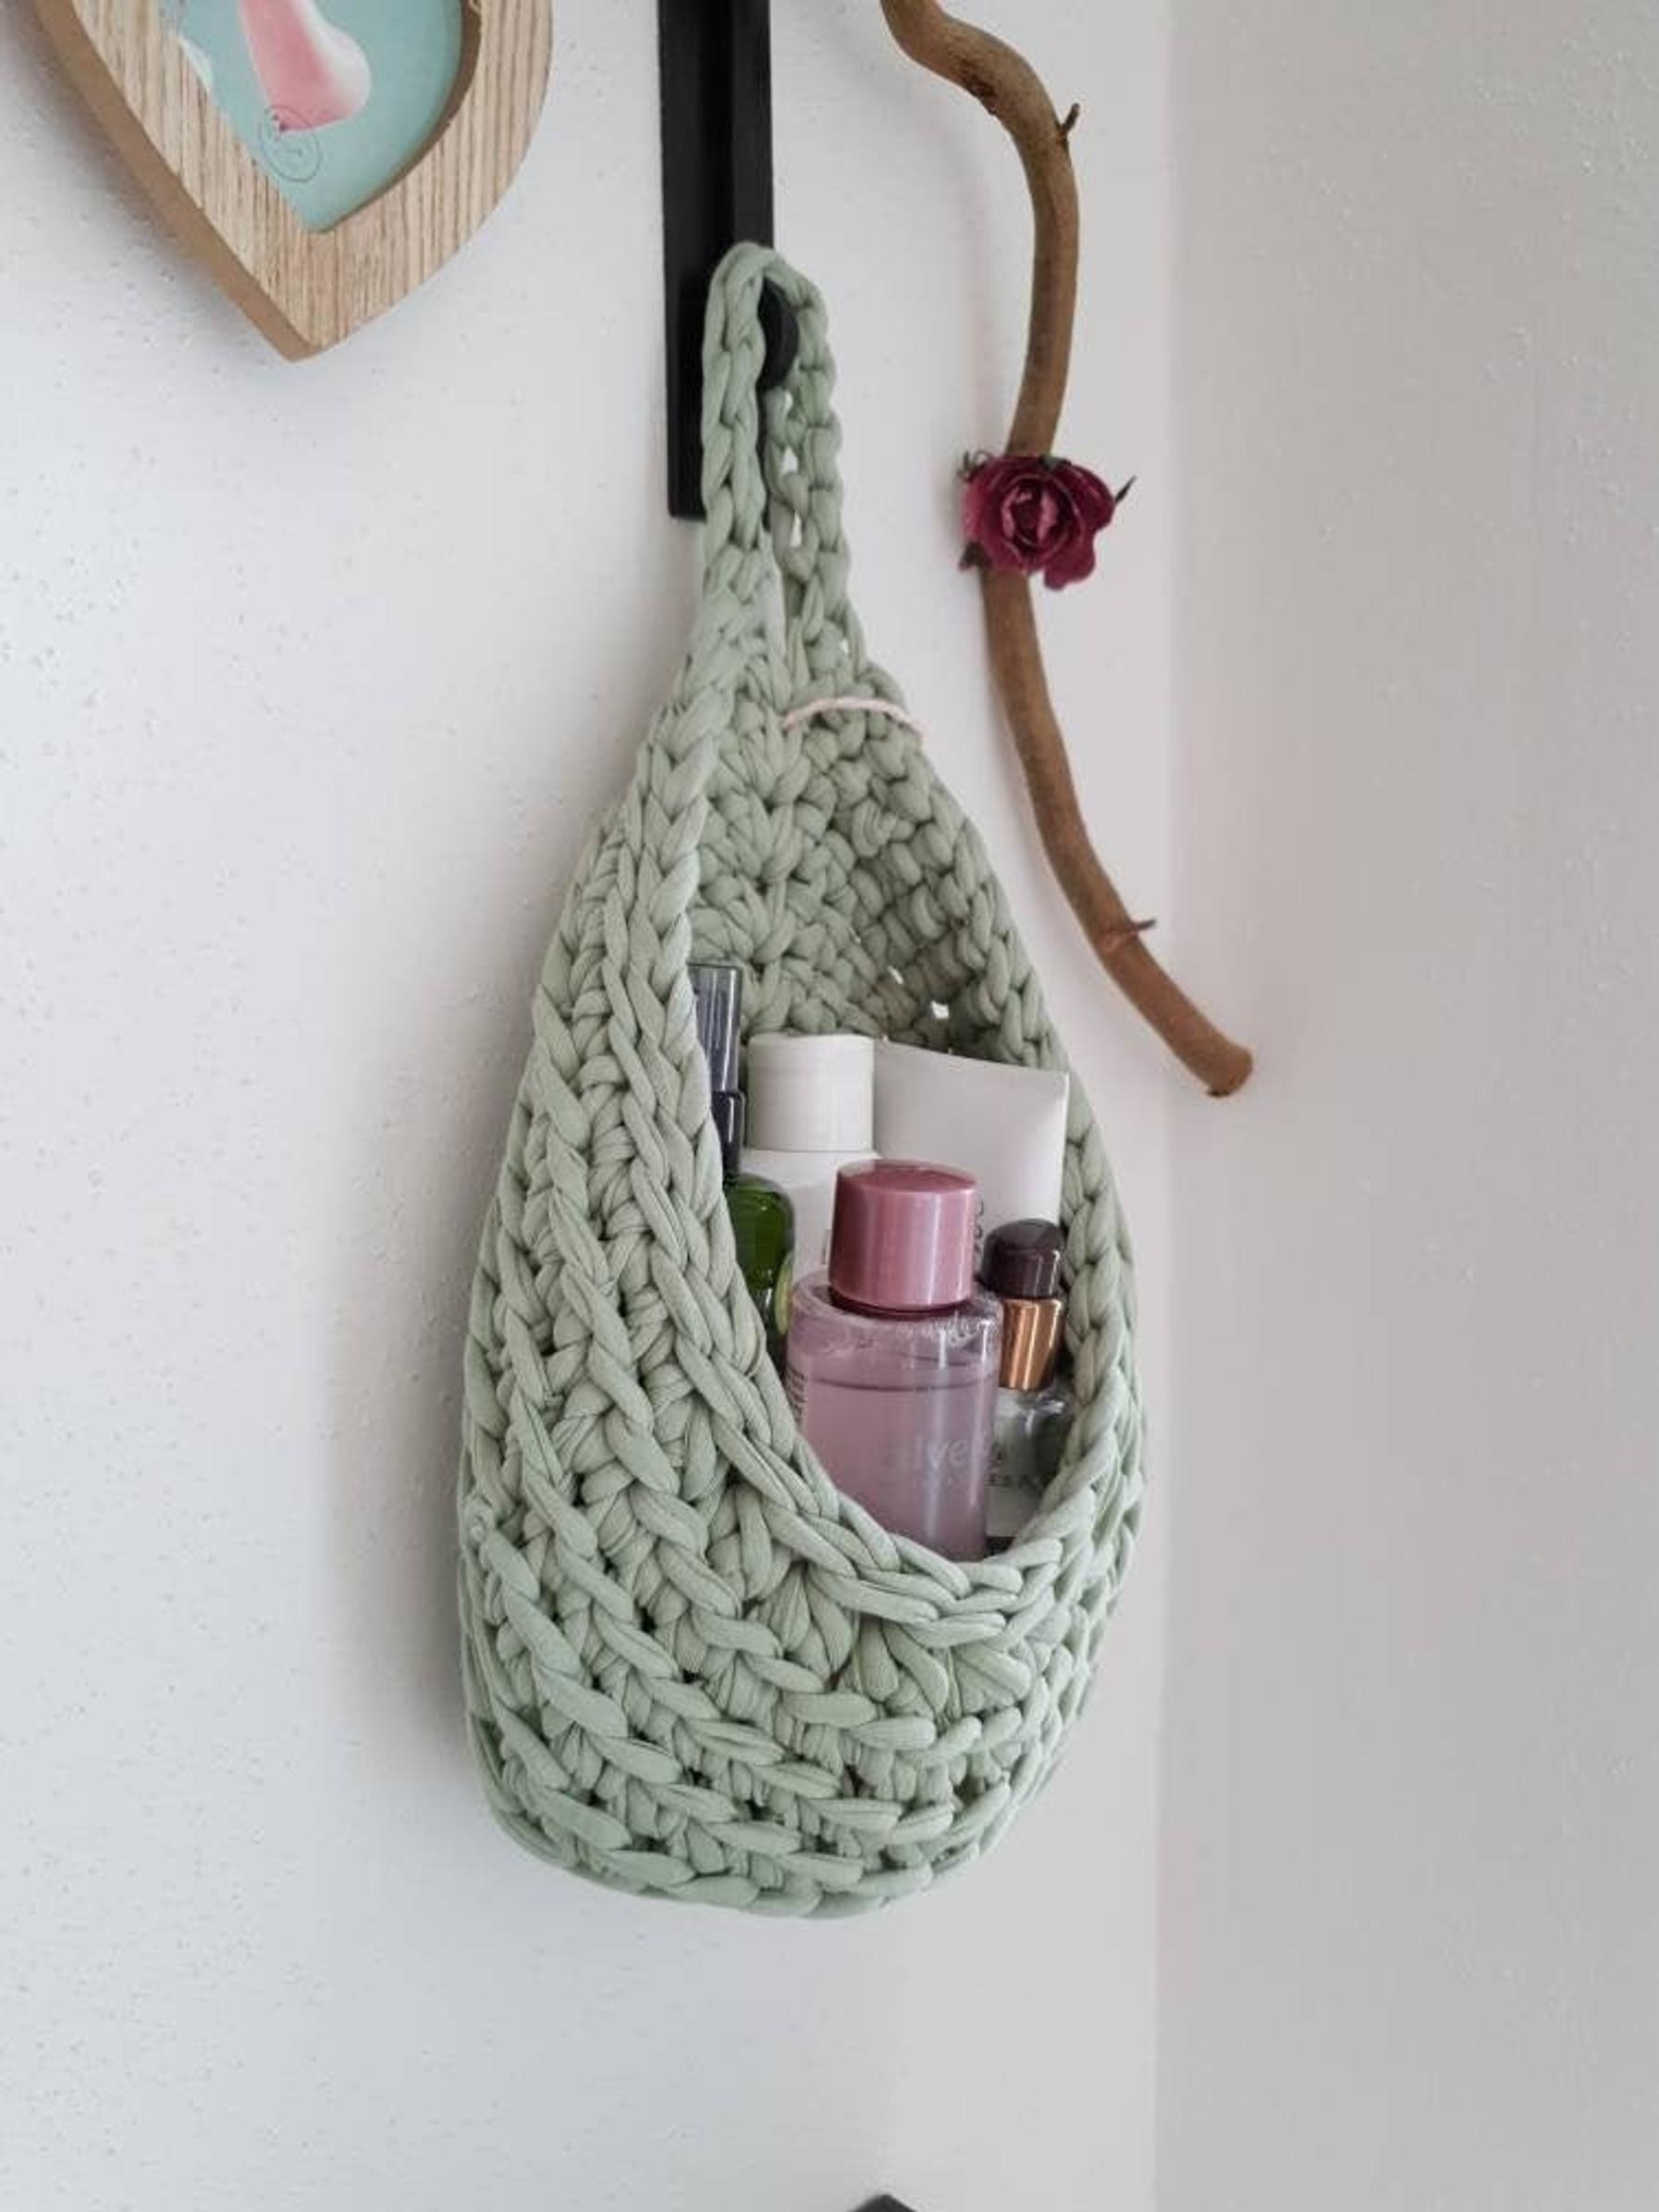 The knit hanging basket